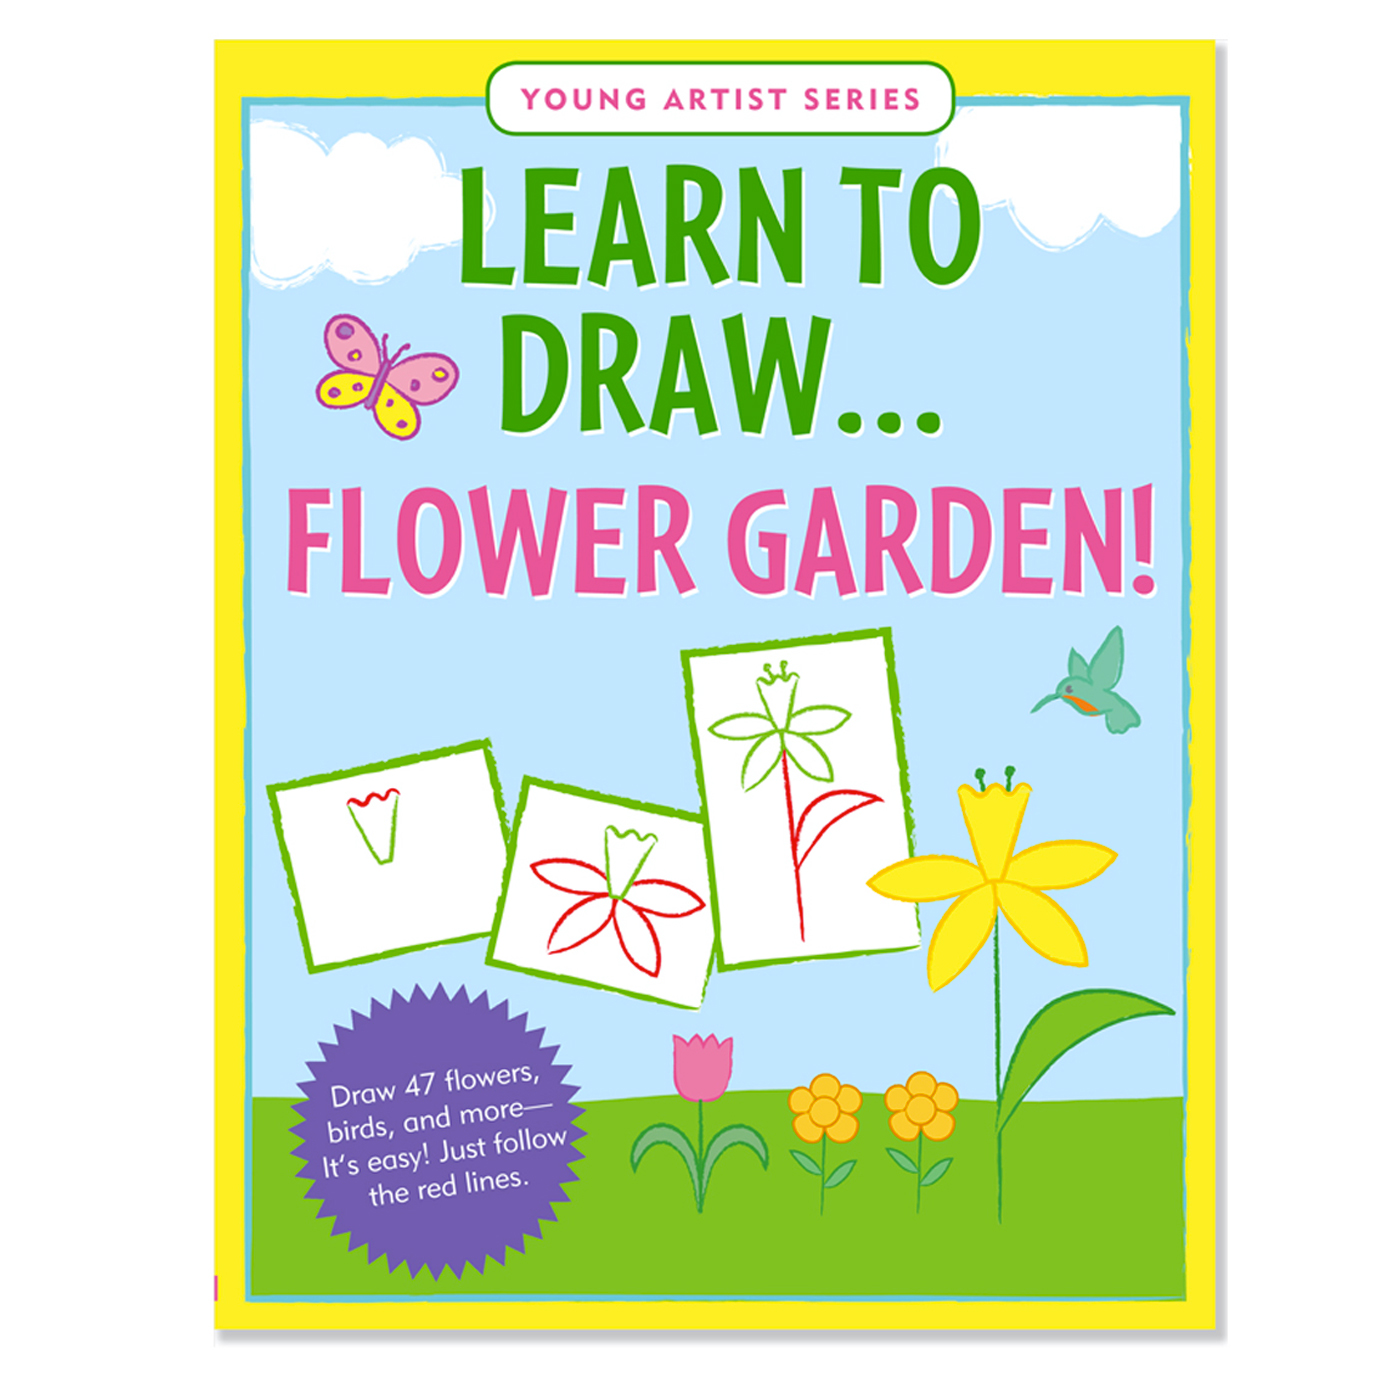  Learn to Draw Flower Garden